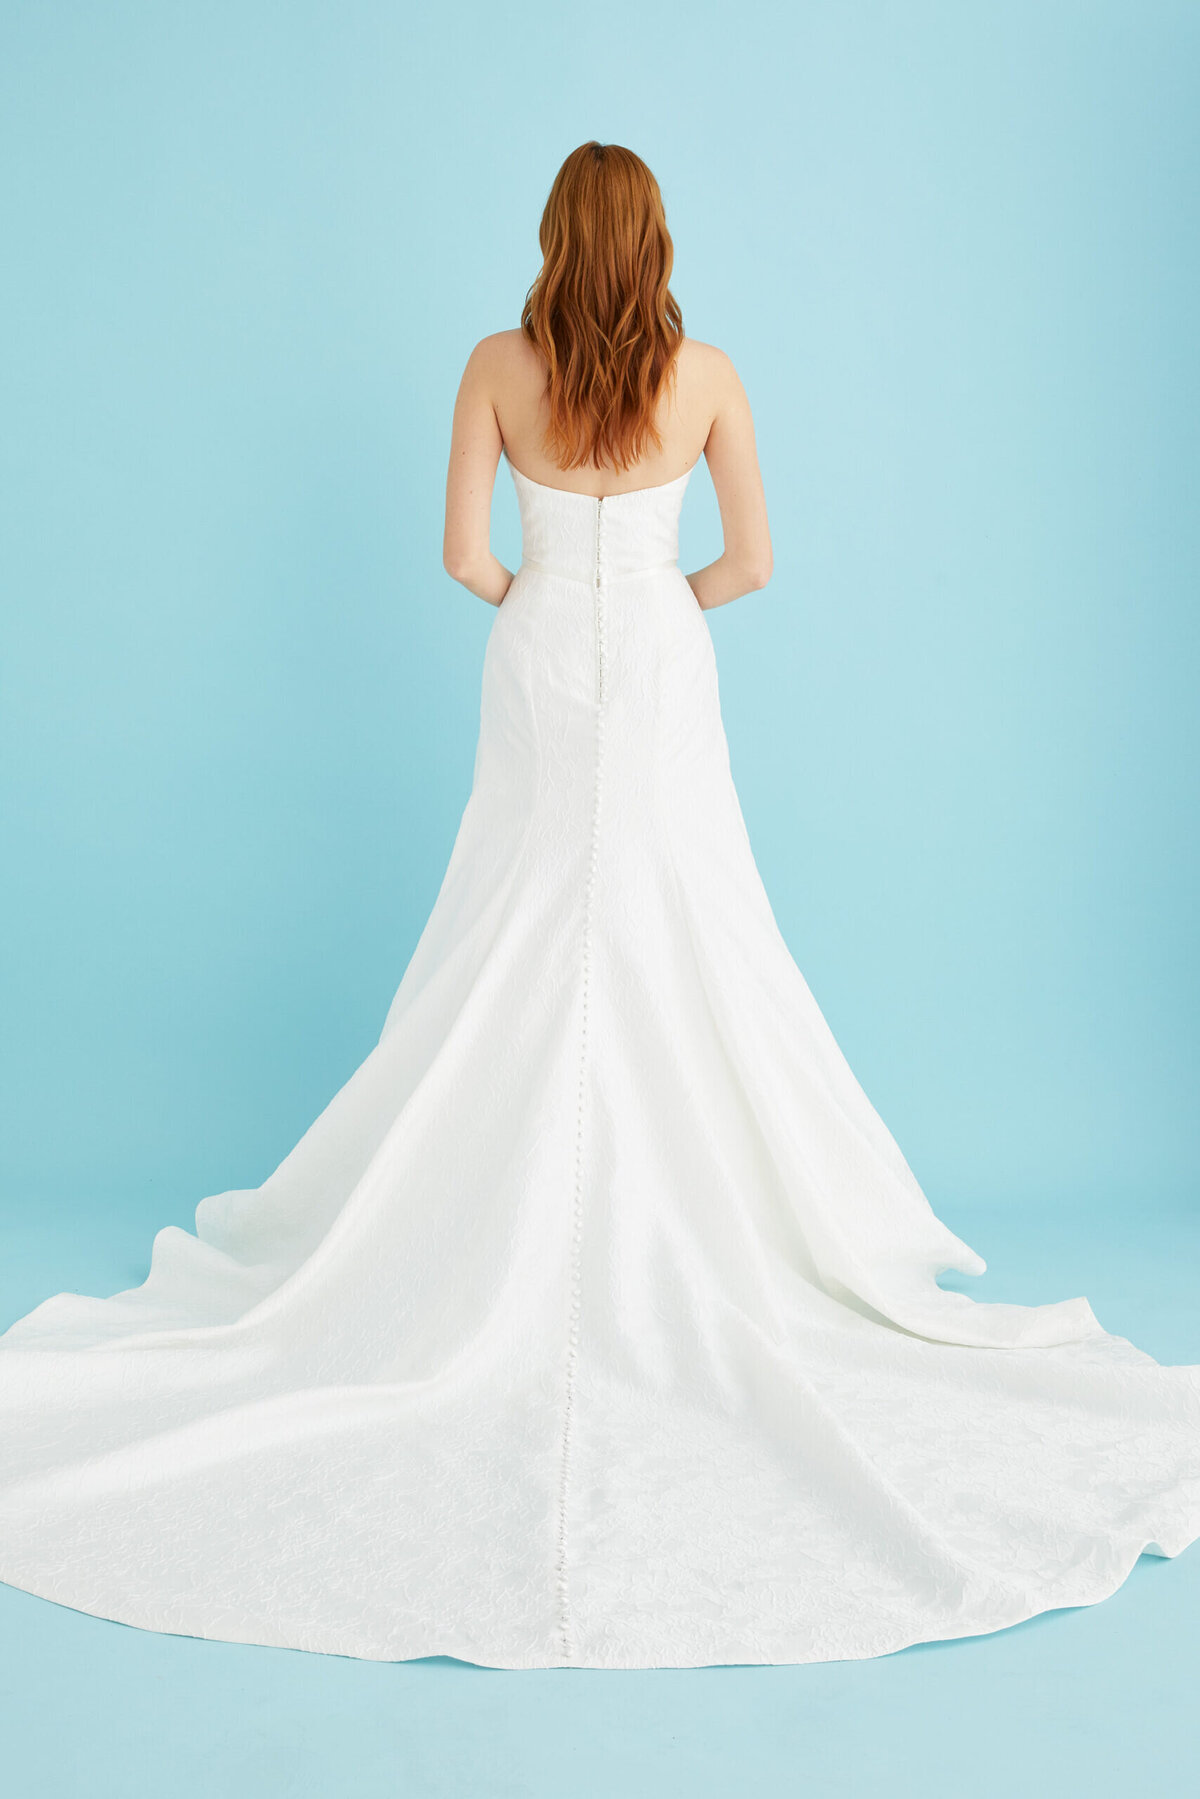 Columbia, SC wedding dress